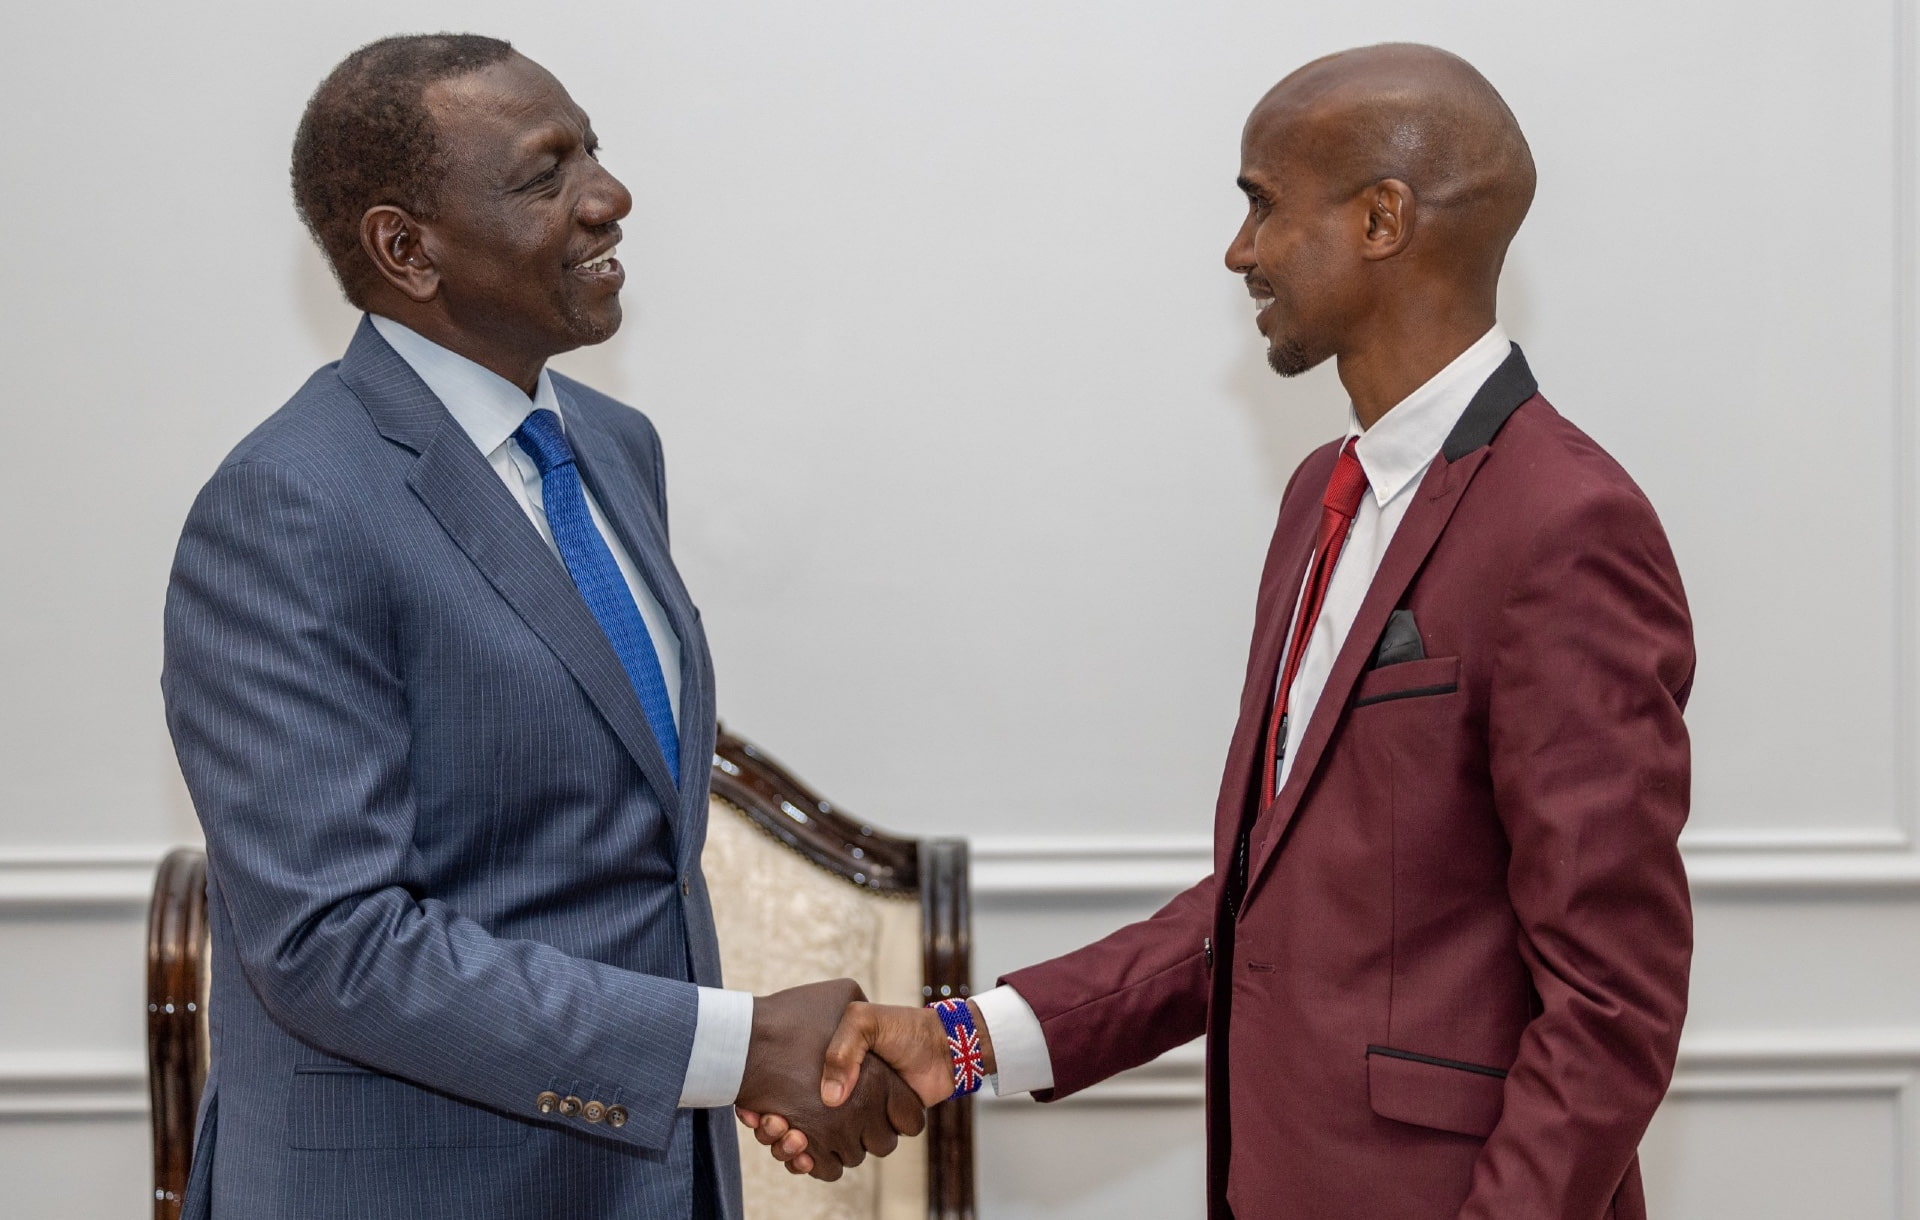 Mo Farah wraps up Kenya visit with high-level meeting at State House